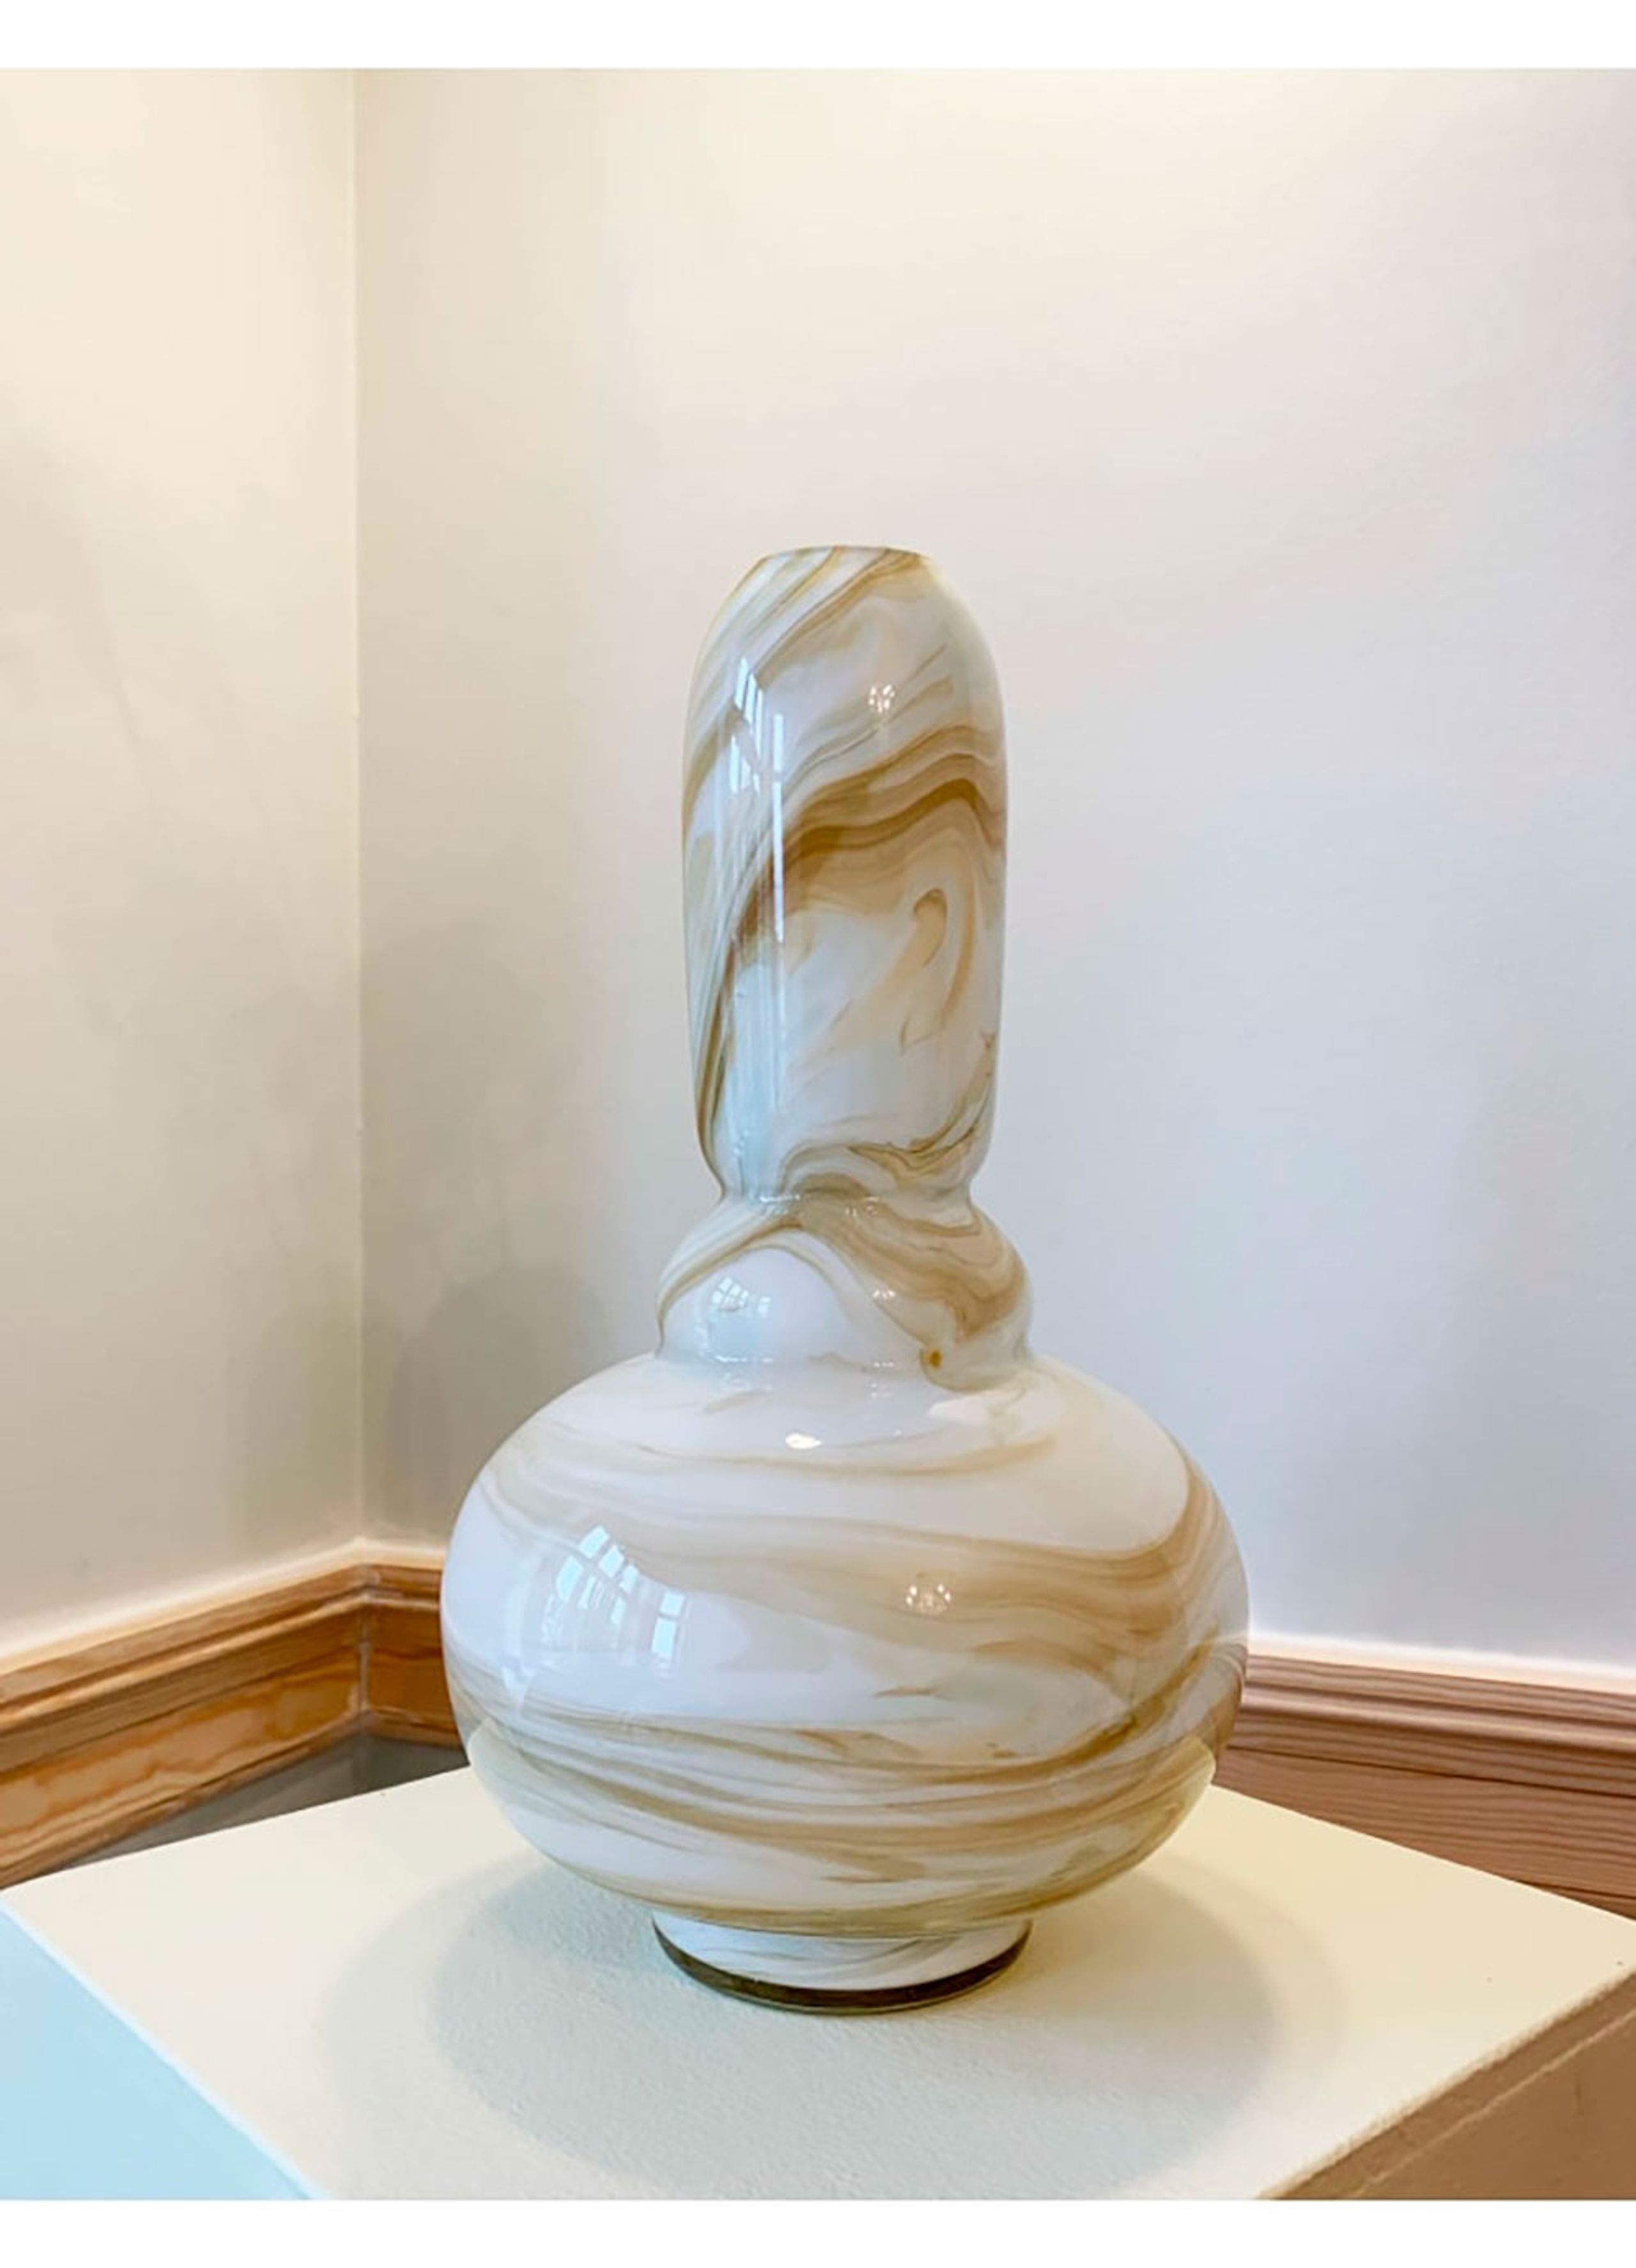 eden outcast - Vase - Eden outcast - Twirl Vase - Twirl Vase Marble Yellow Tall